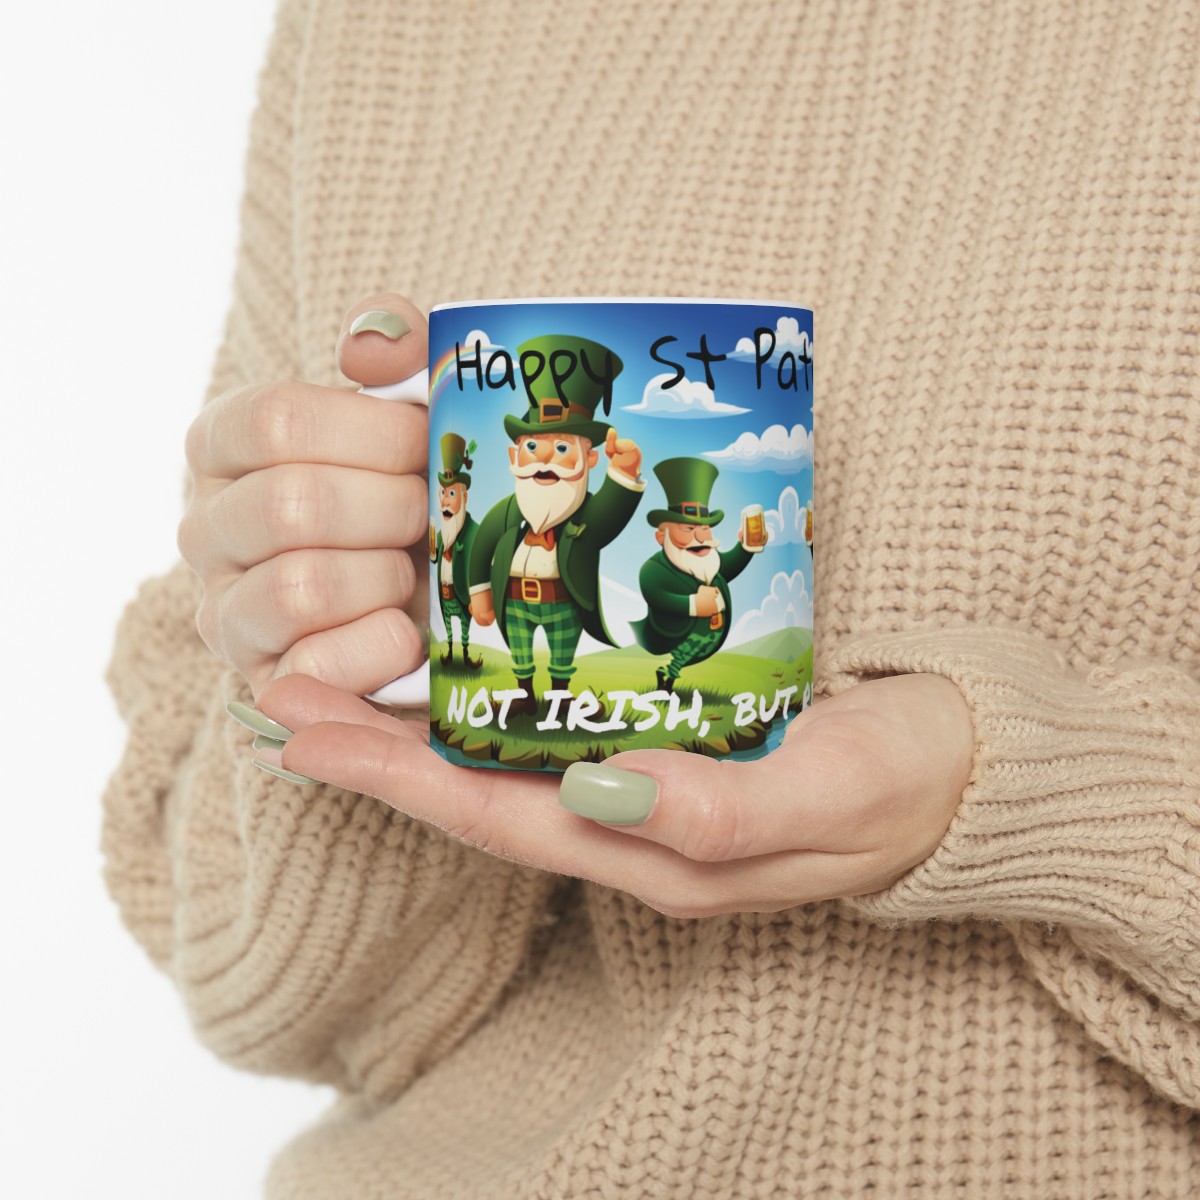 Happy St Patrick's Day, NOT IRISH, but ready to party!  - Ceramic Mug 11oz product thumbnail image